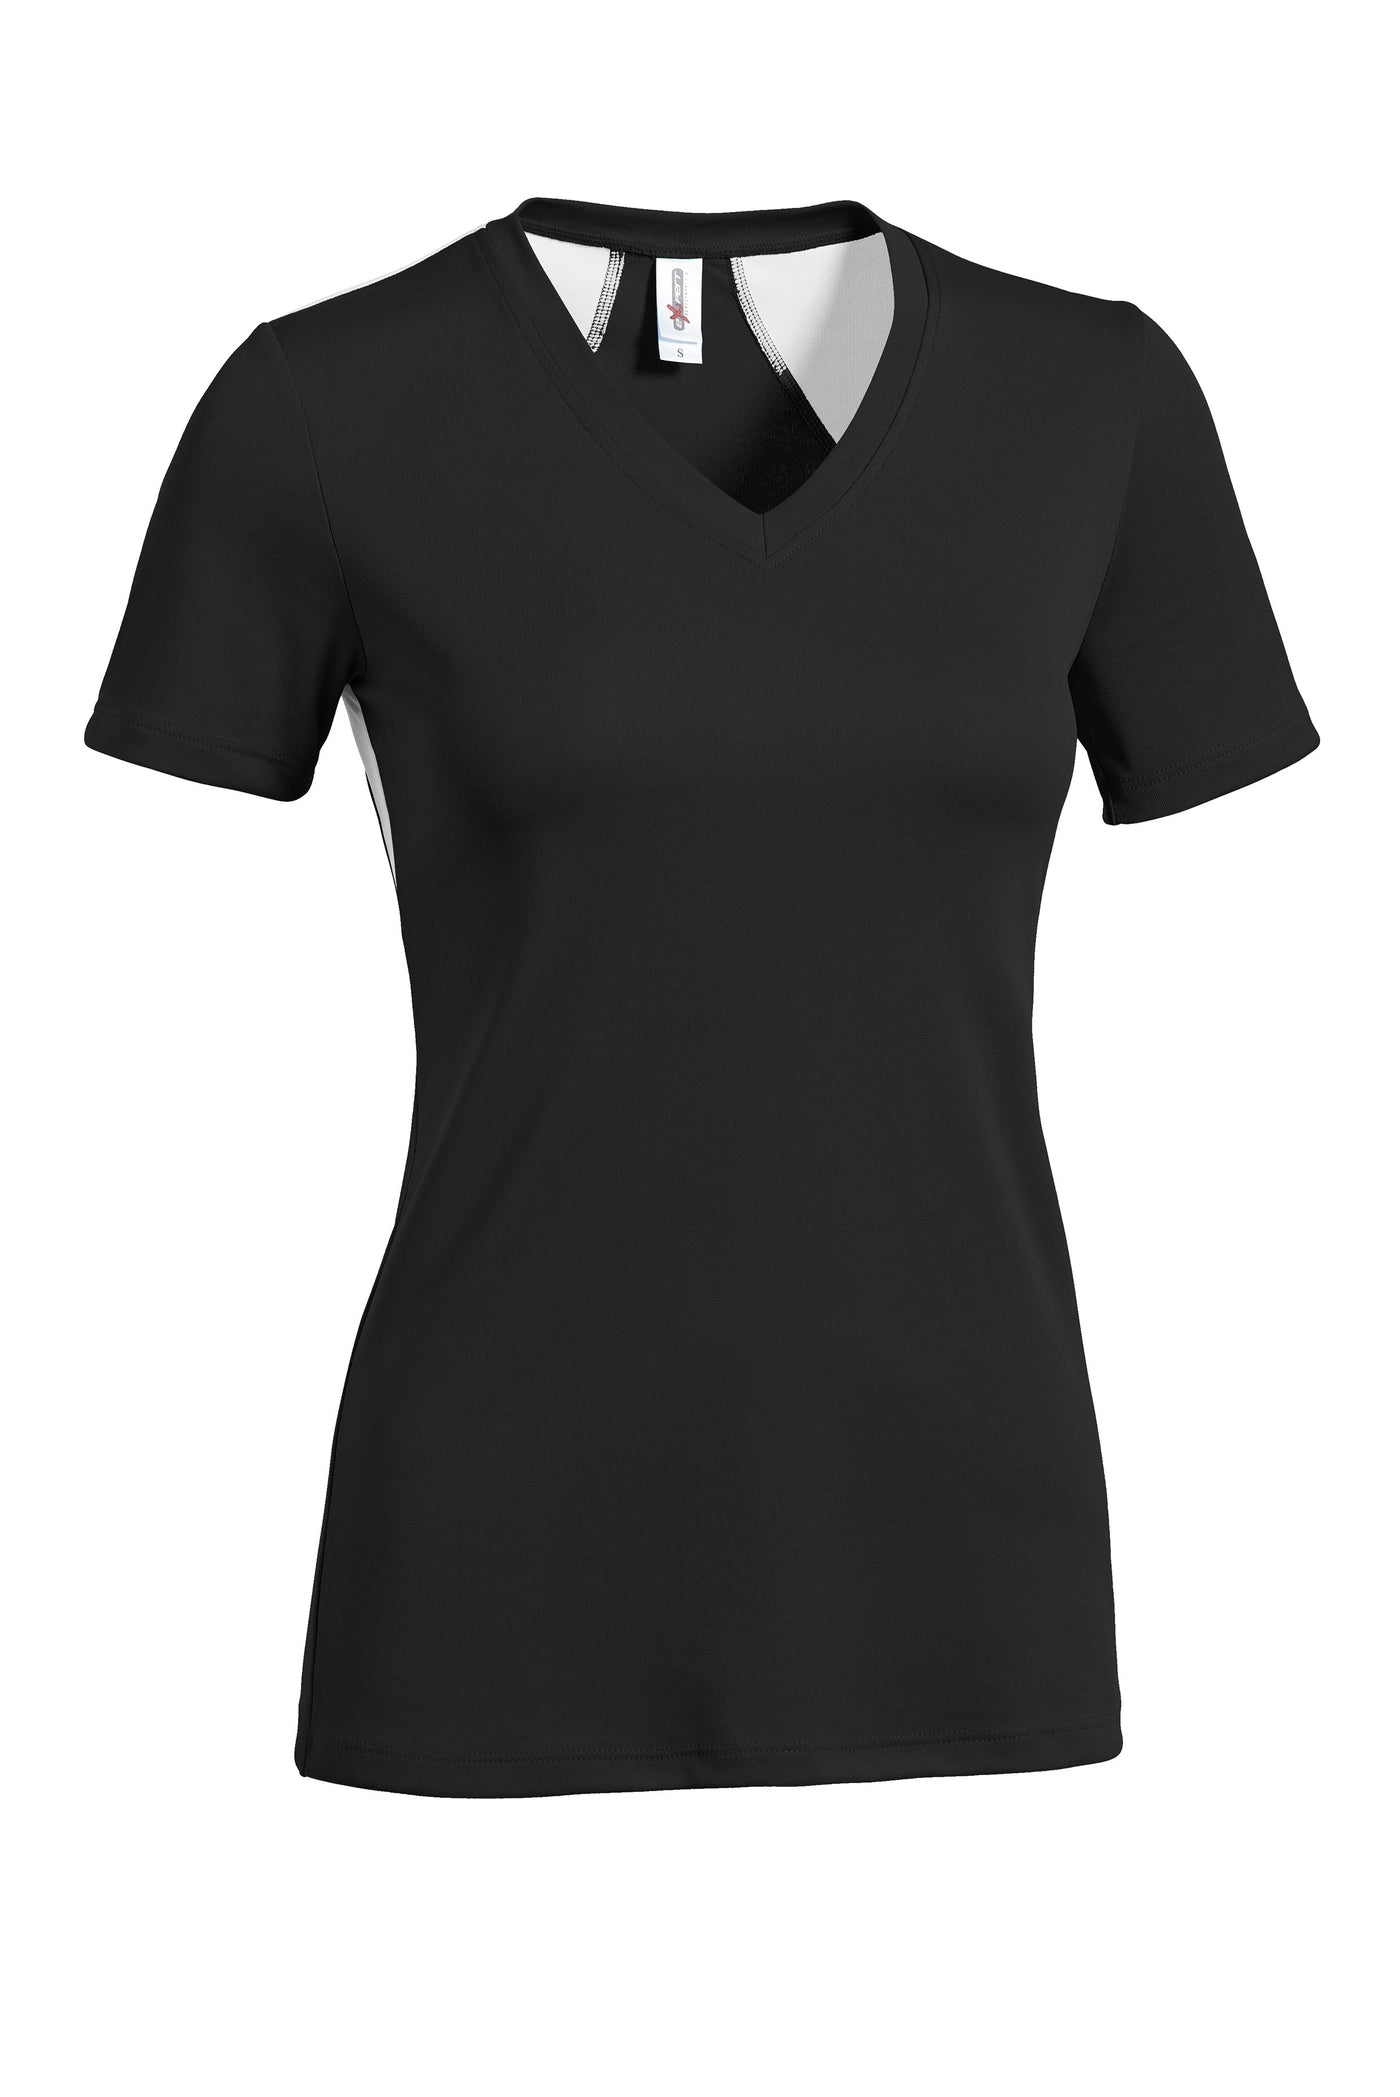 Expert Brand Retail Women's Angel Wings V-Neck Made in USA black#color_black-white